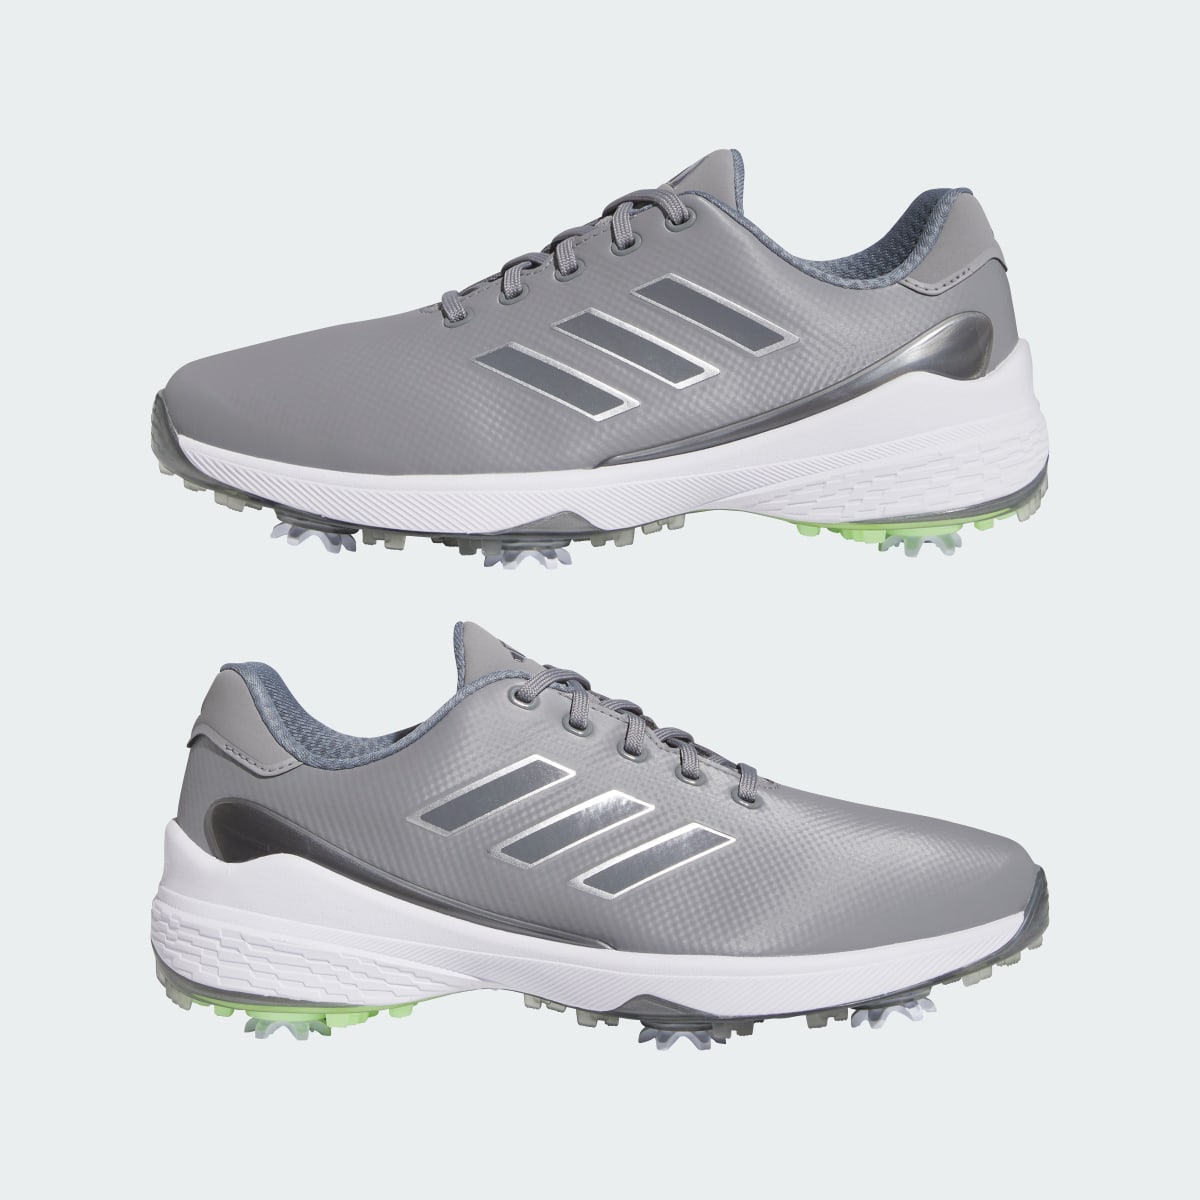 Adidas ZG23 Lightstrike Golf Shoes. 8